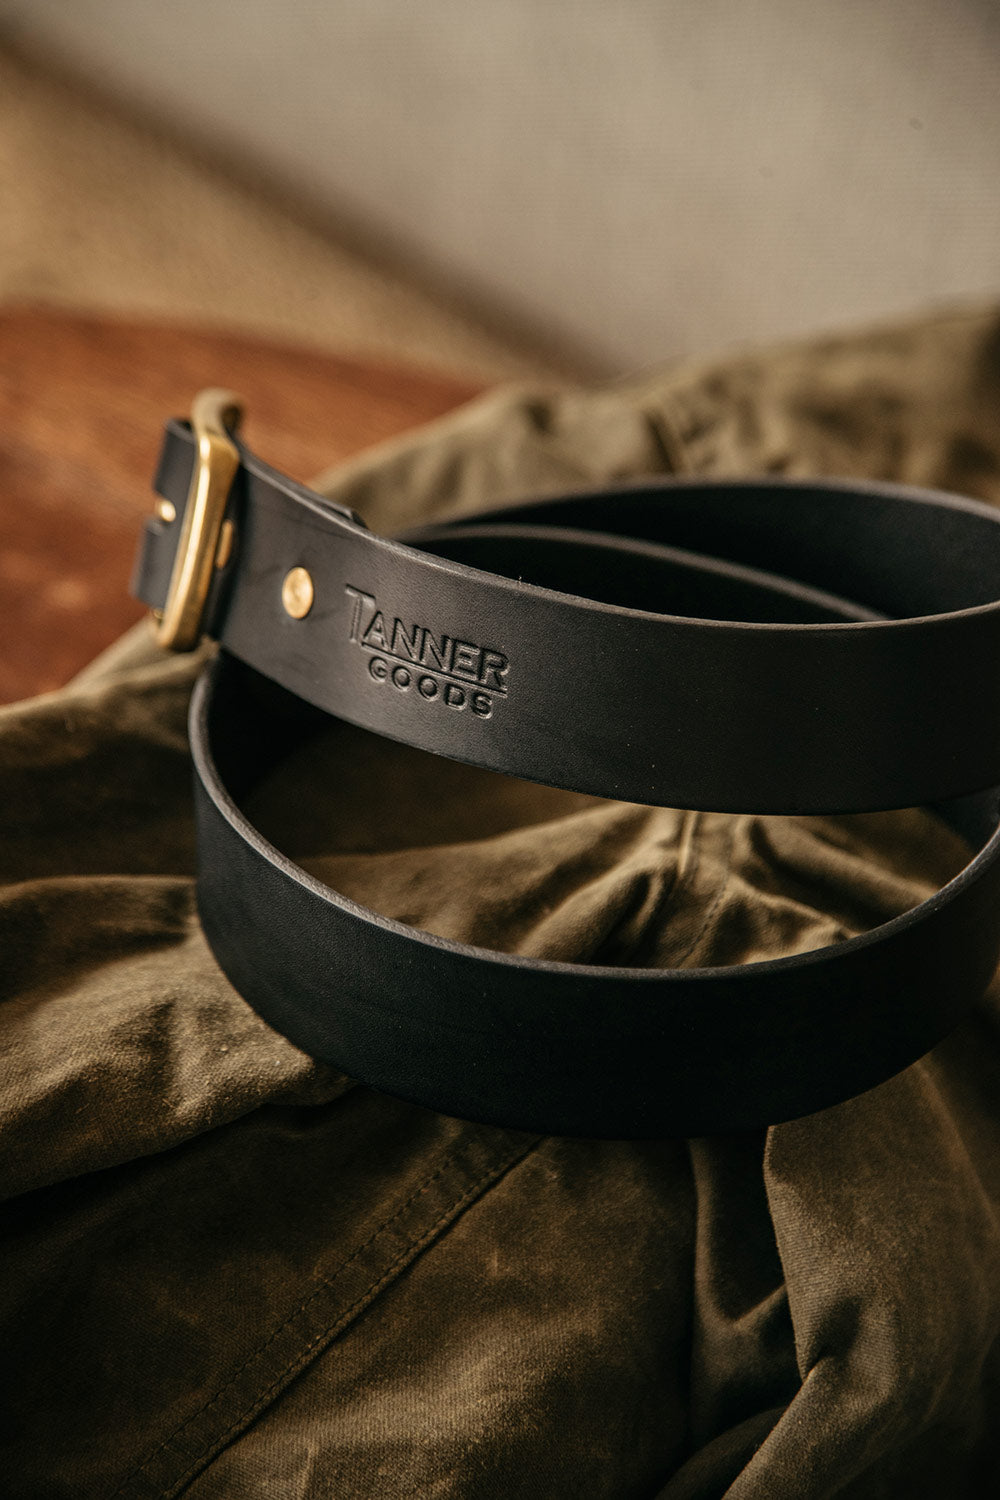 - USA the | Black Tanner | Goods Belt Standard Made in